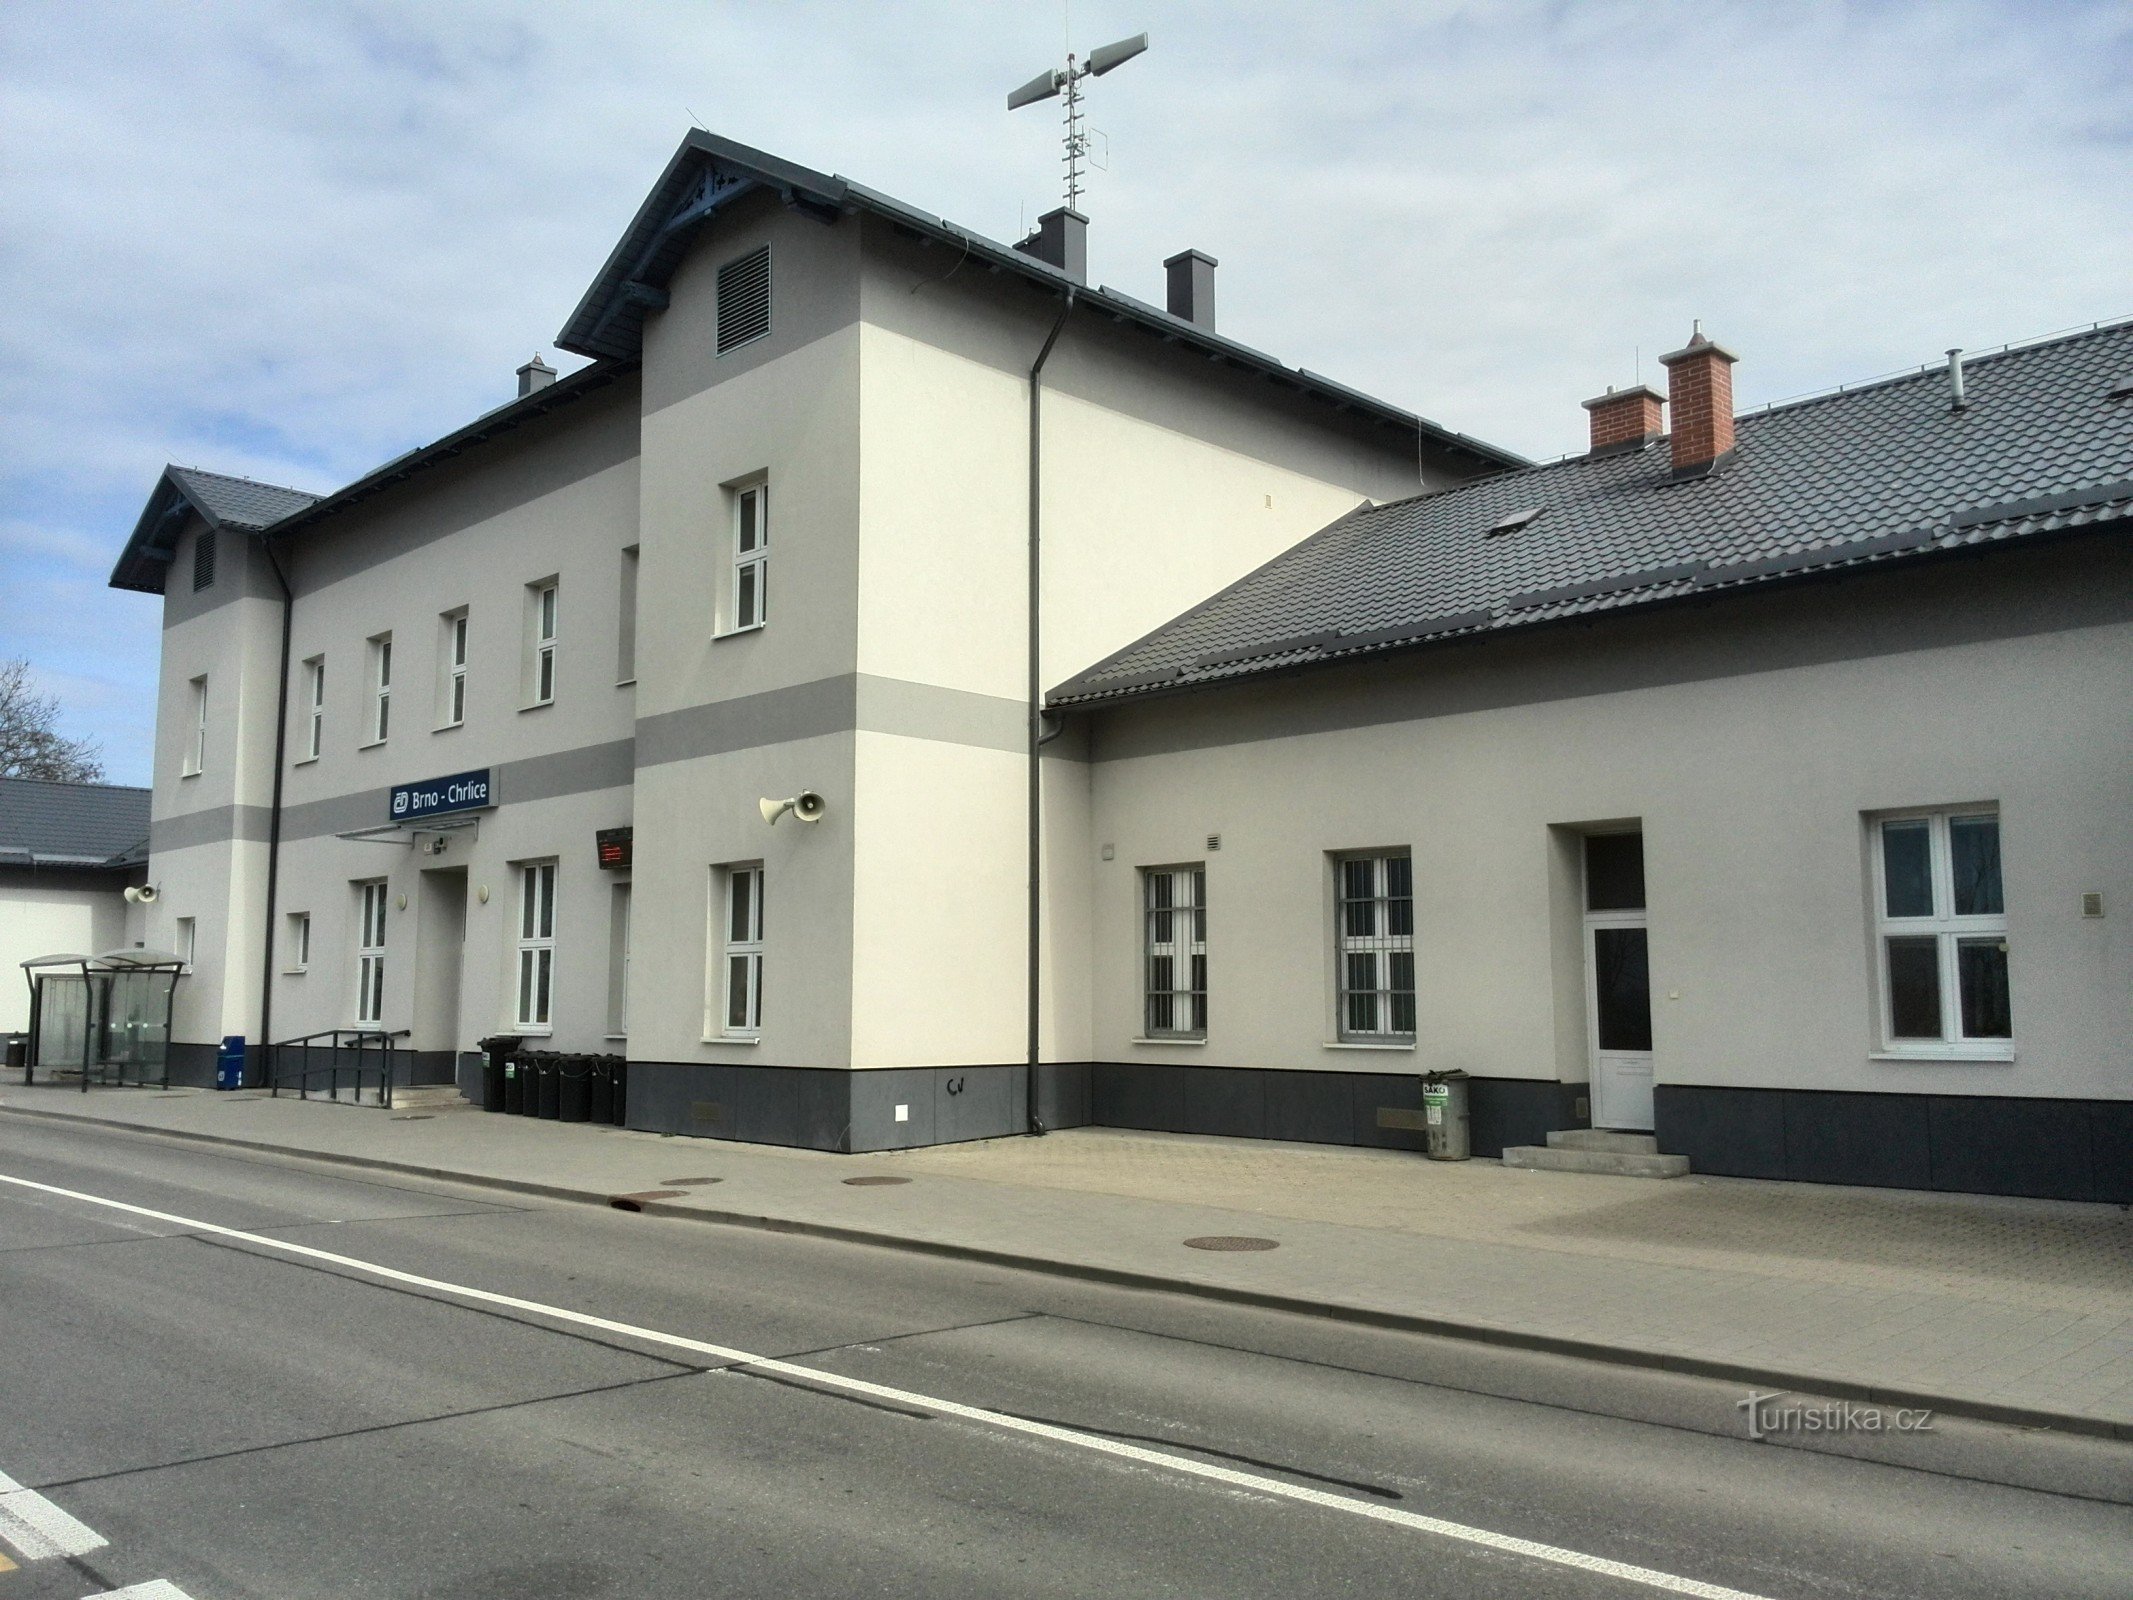 Stacja kolejowa Chrlické